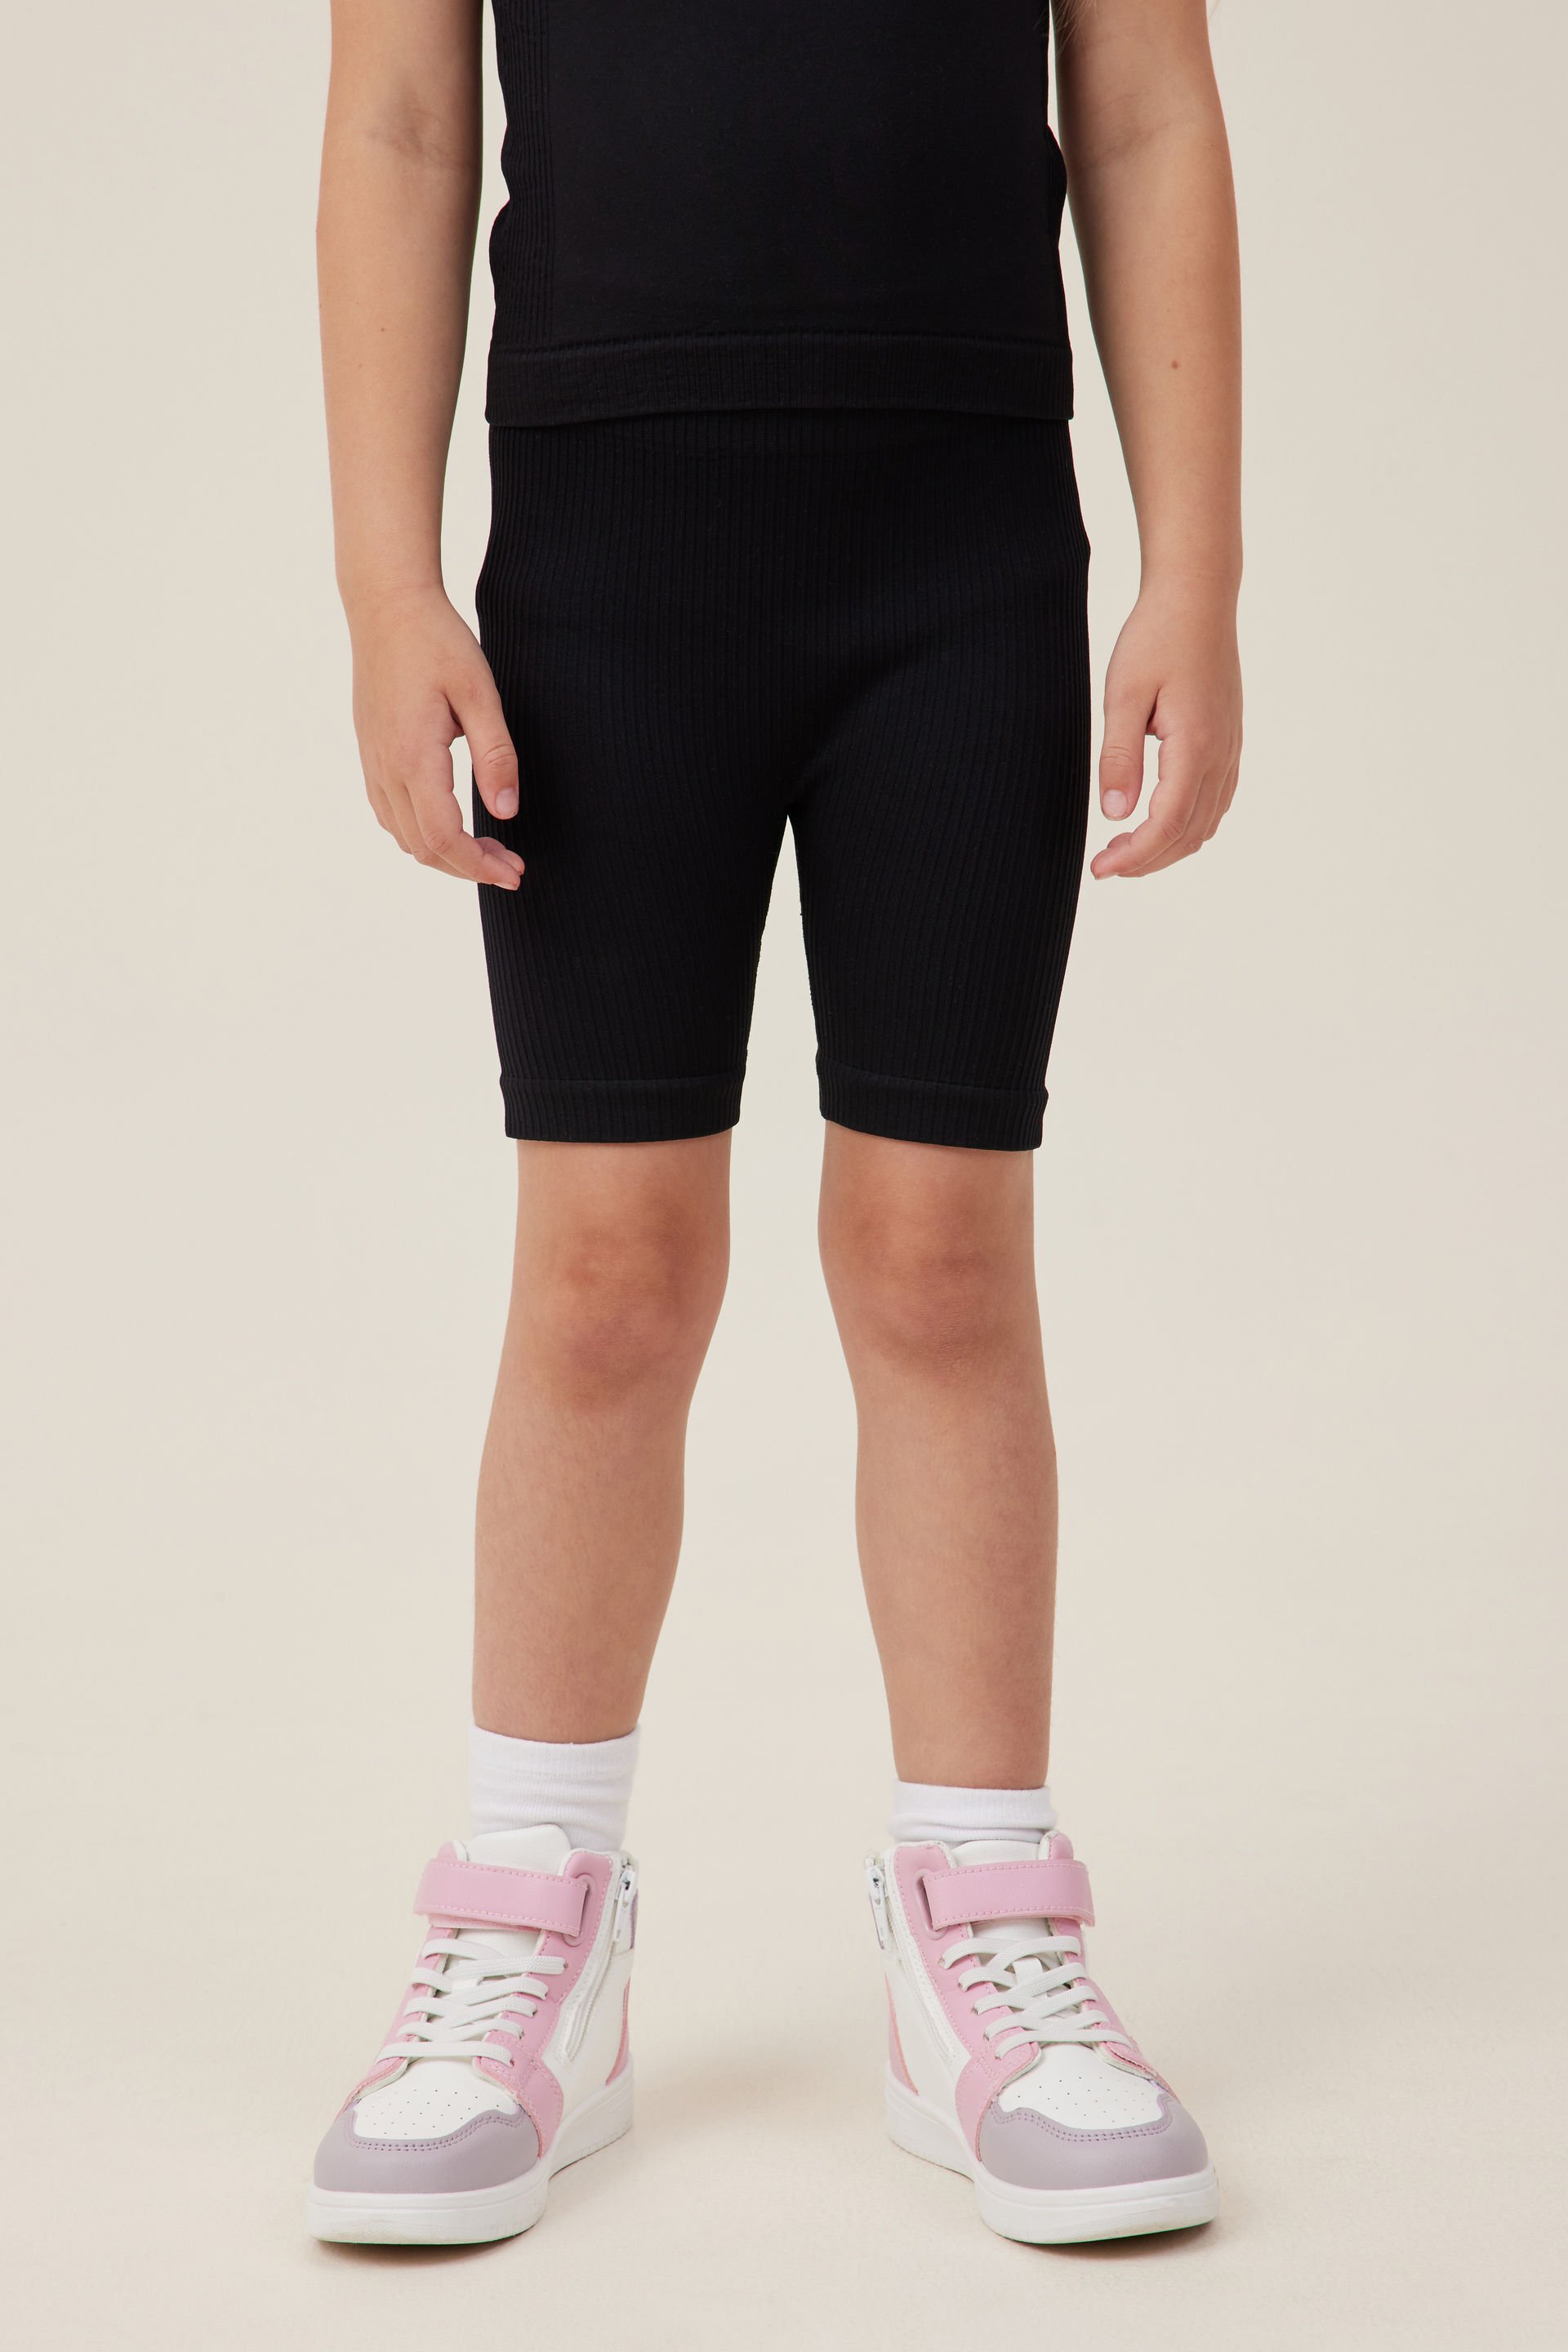 Buy French Kleider Kids Girls Cotton Leggings Pack of 2 (Maroon & Skin) (2  Years - 3 Years) at Amazon.in